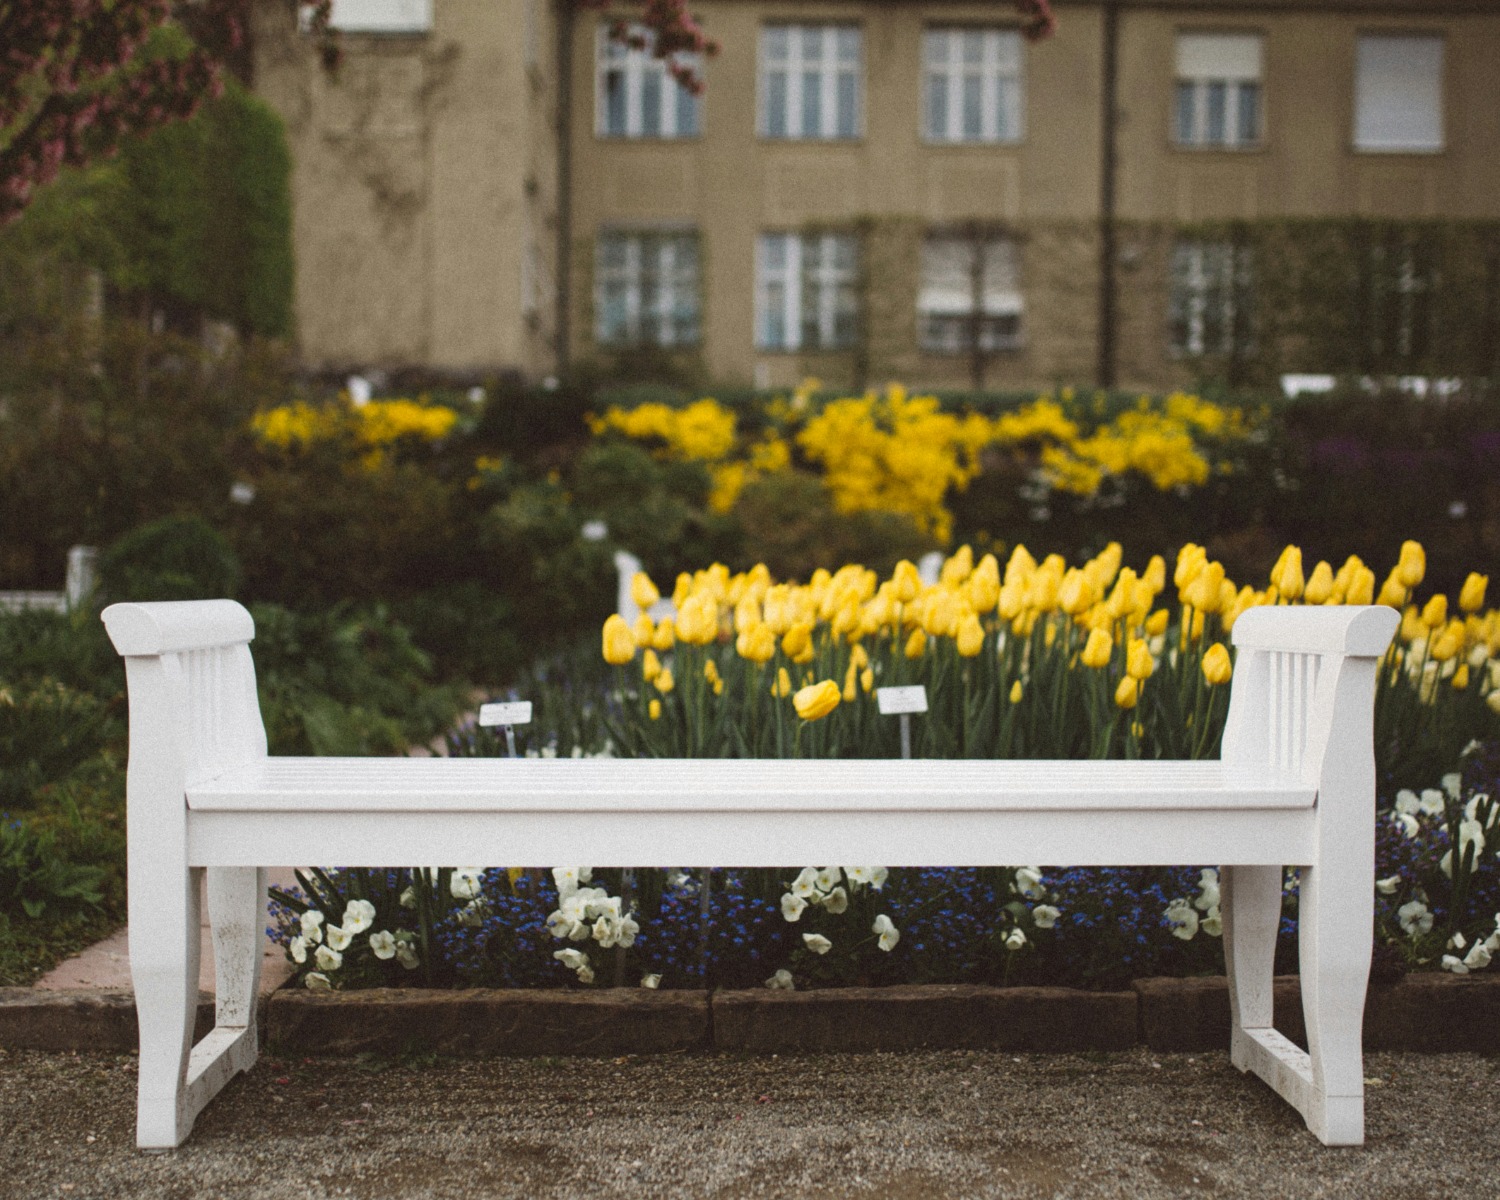 White garden bench amongst yellow flowers